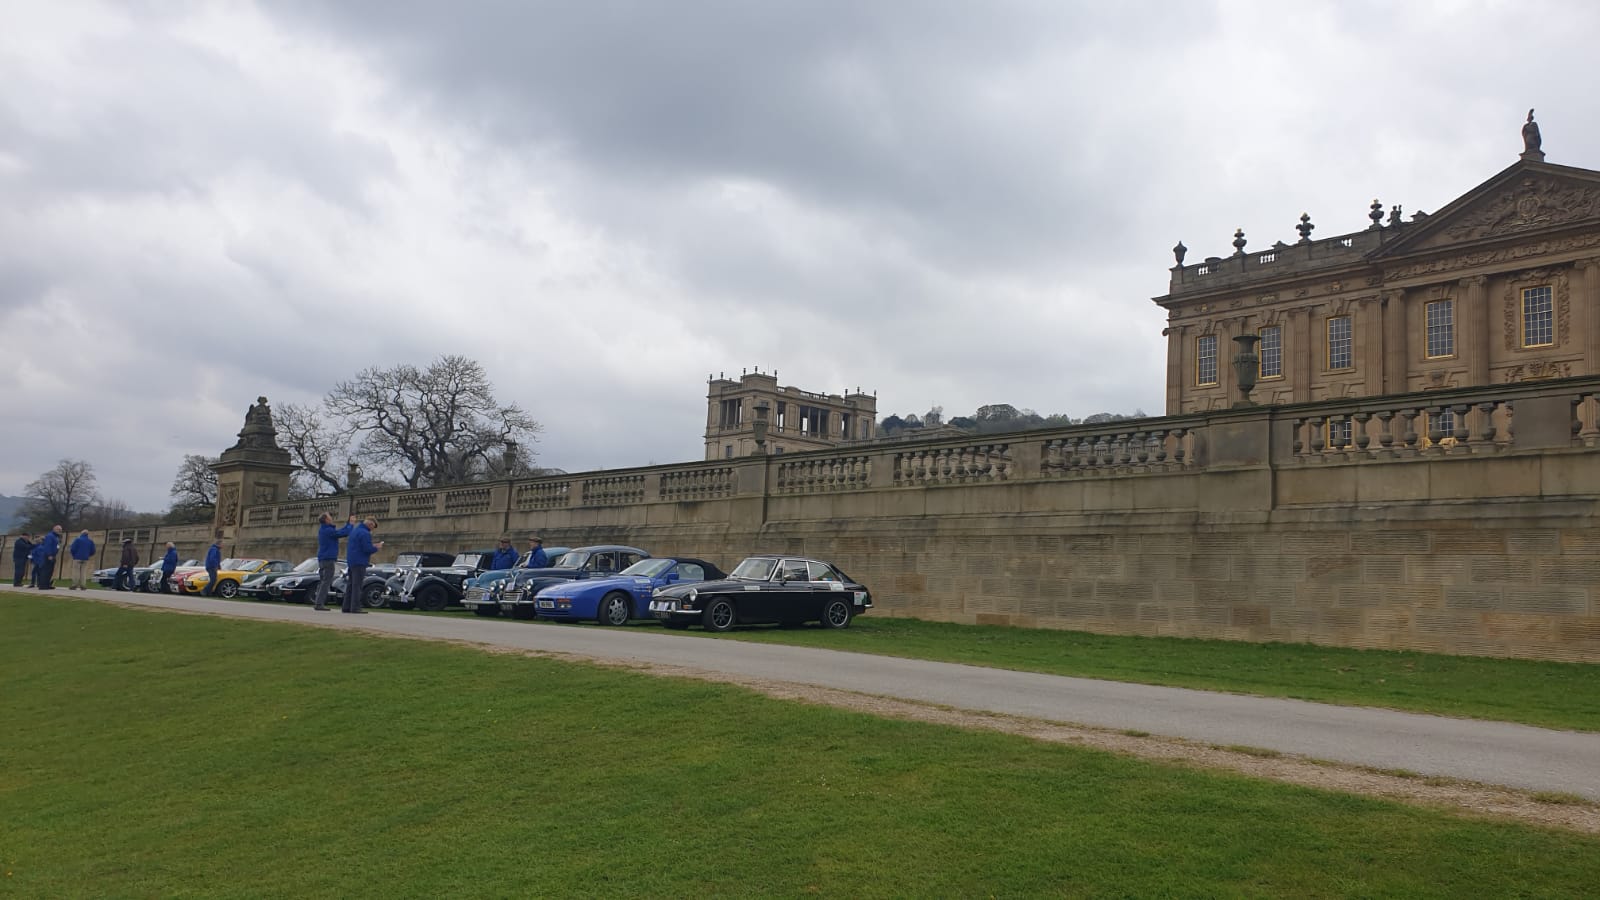 Nigel Allen VW - Grey sky's at Chatsworth House